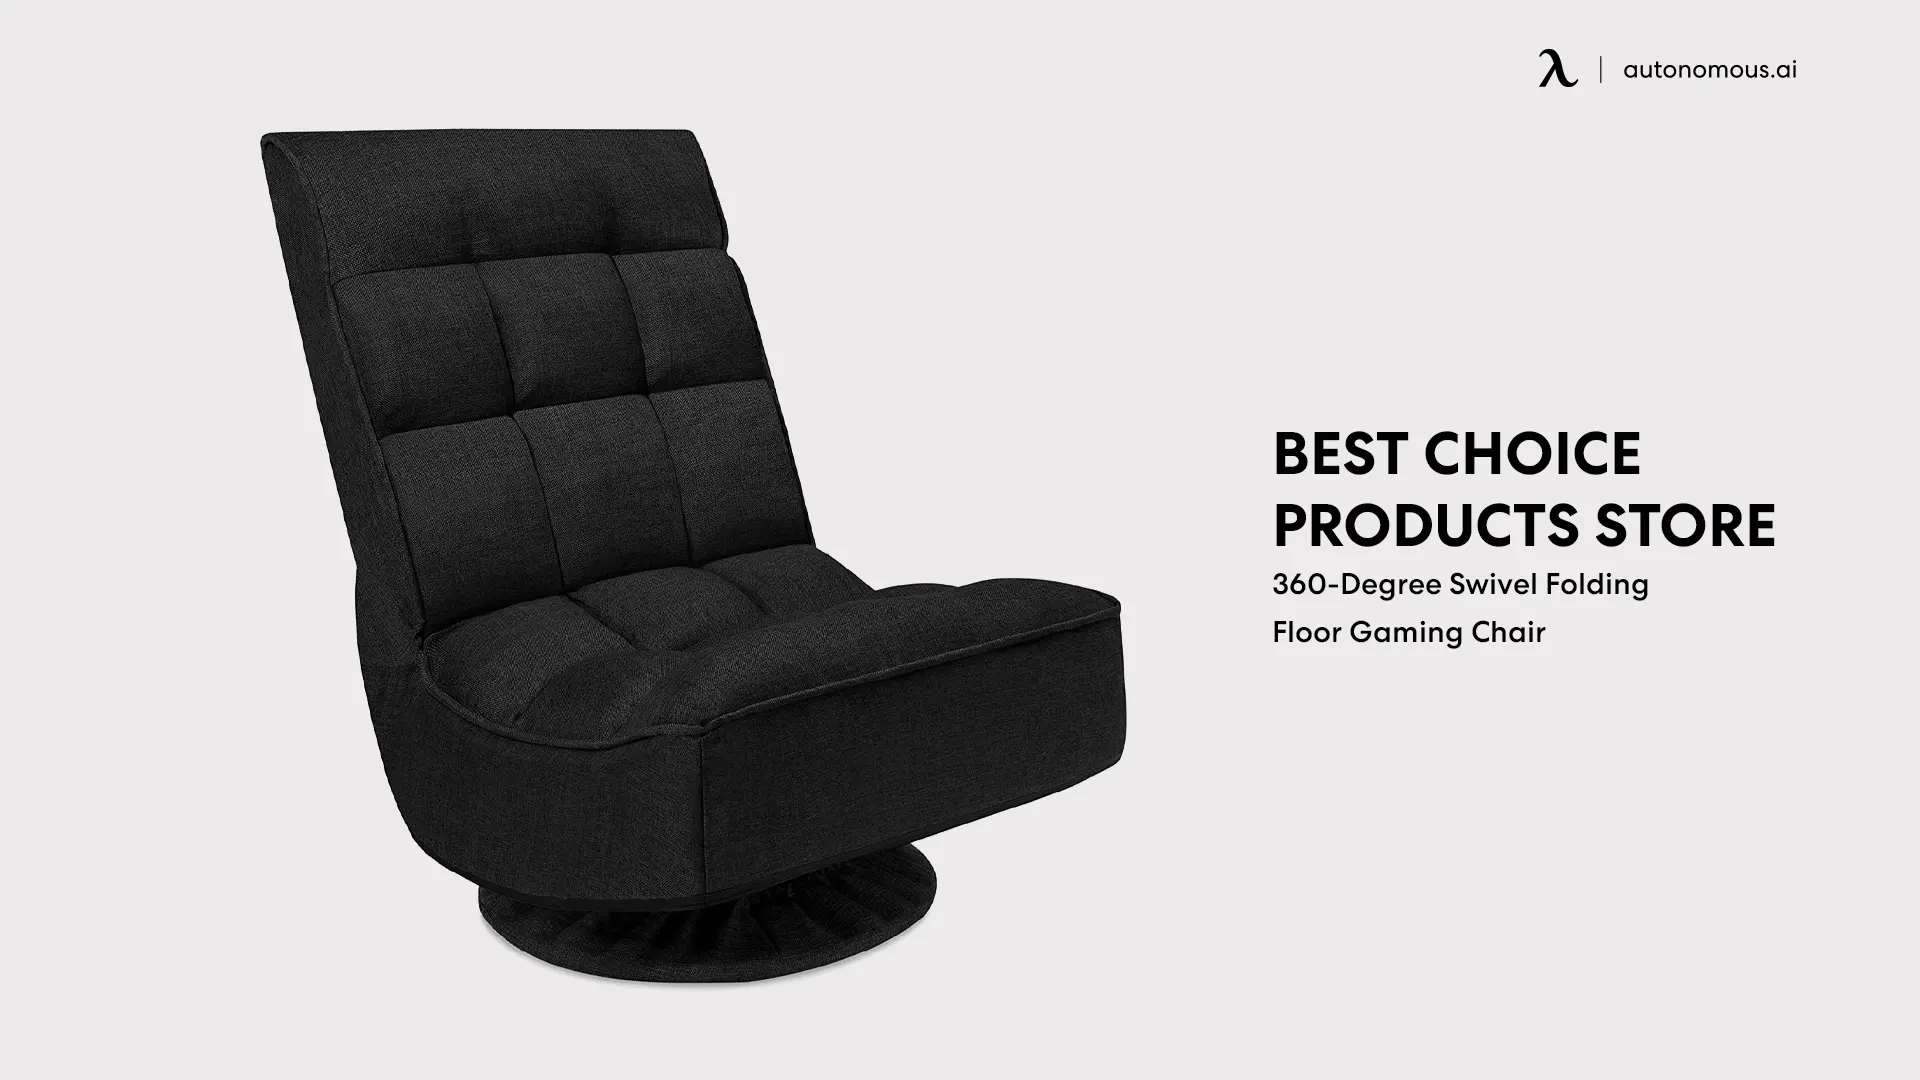 360-Degree Swivel Folding Floor Gaming Chair